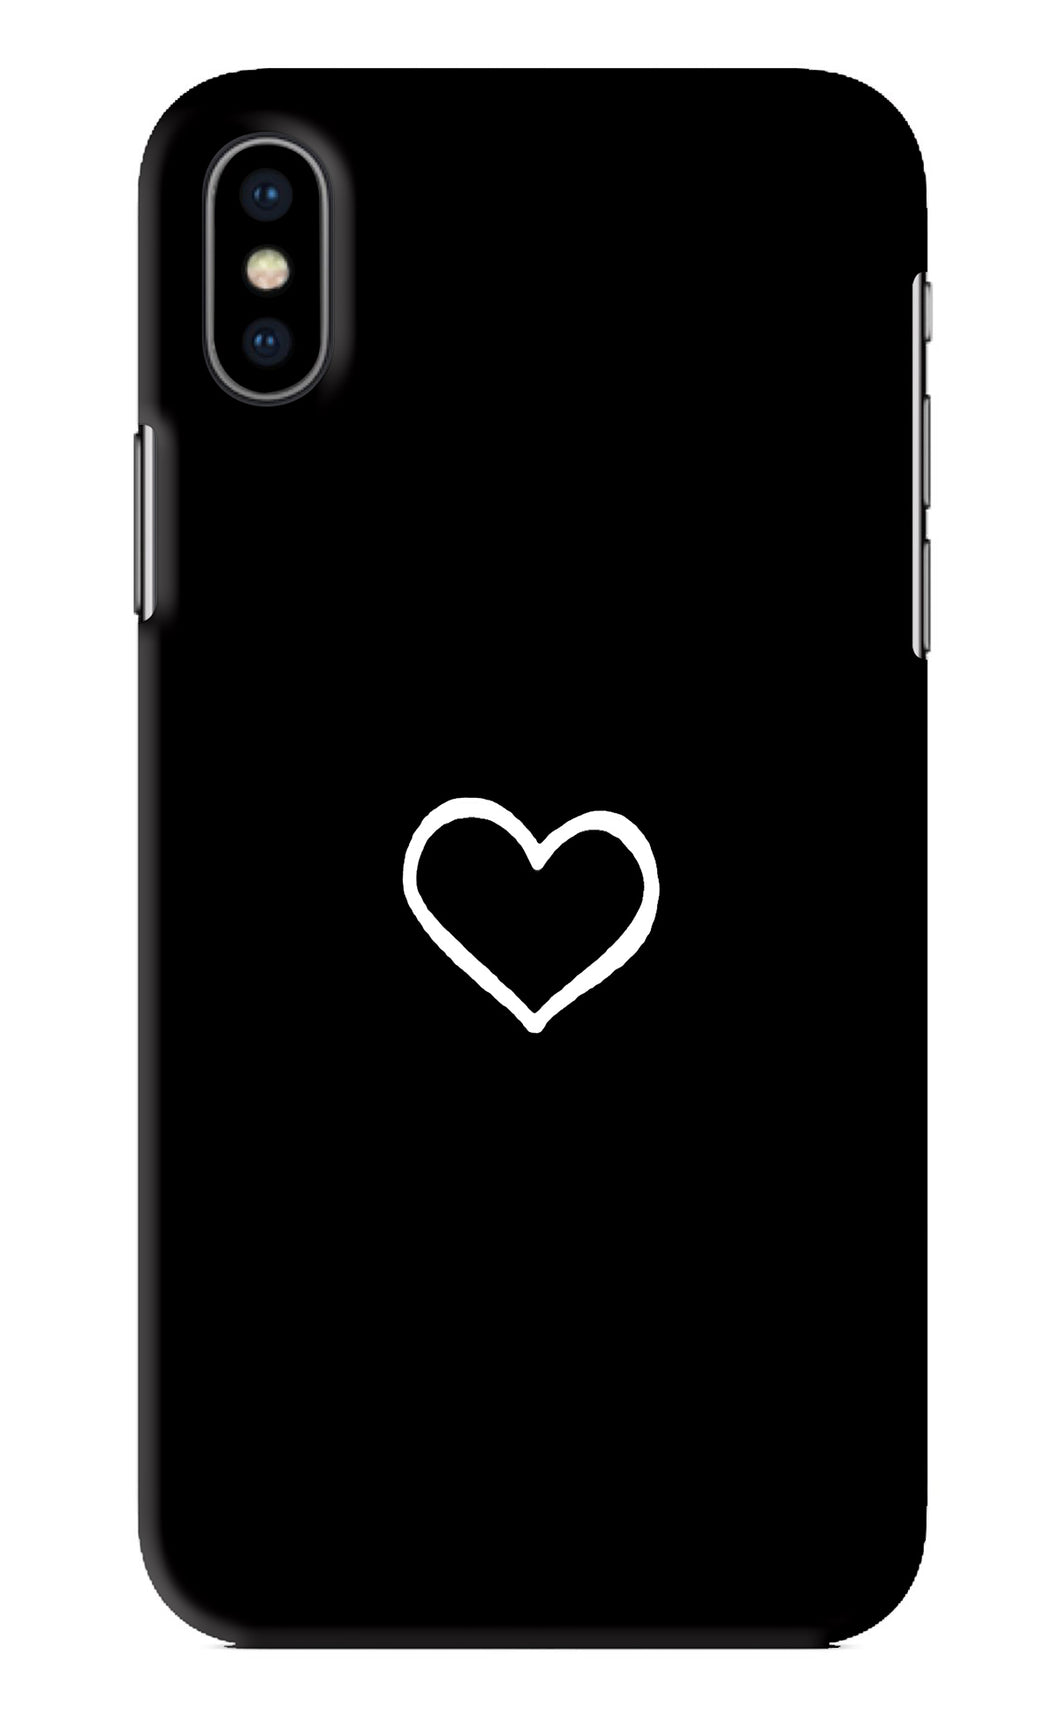 Heart iPhone XS Back Skin Wrap